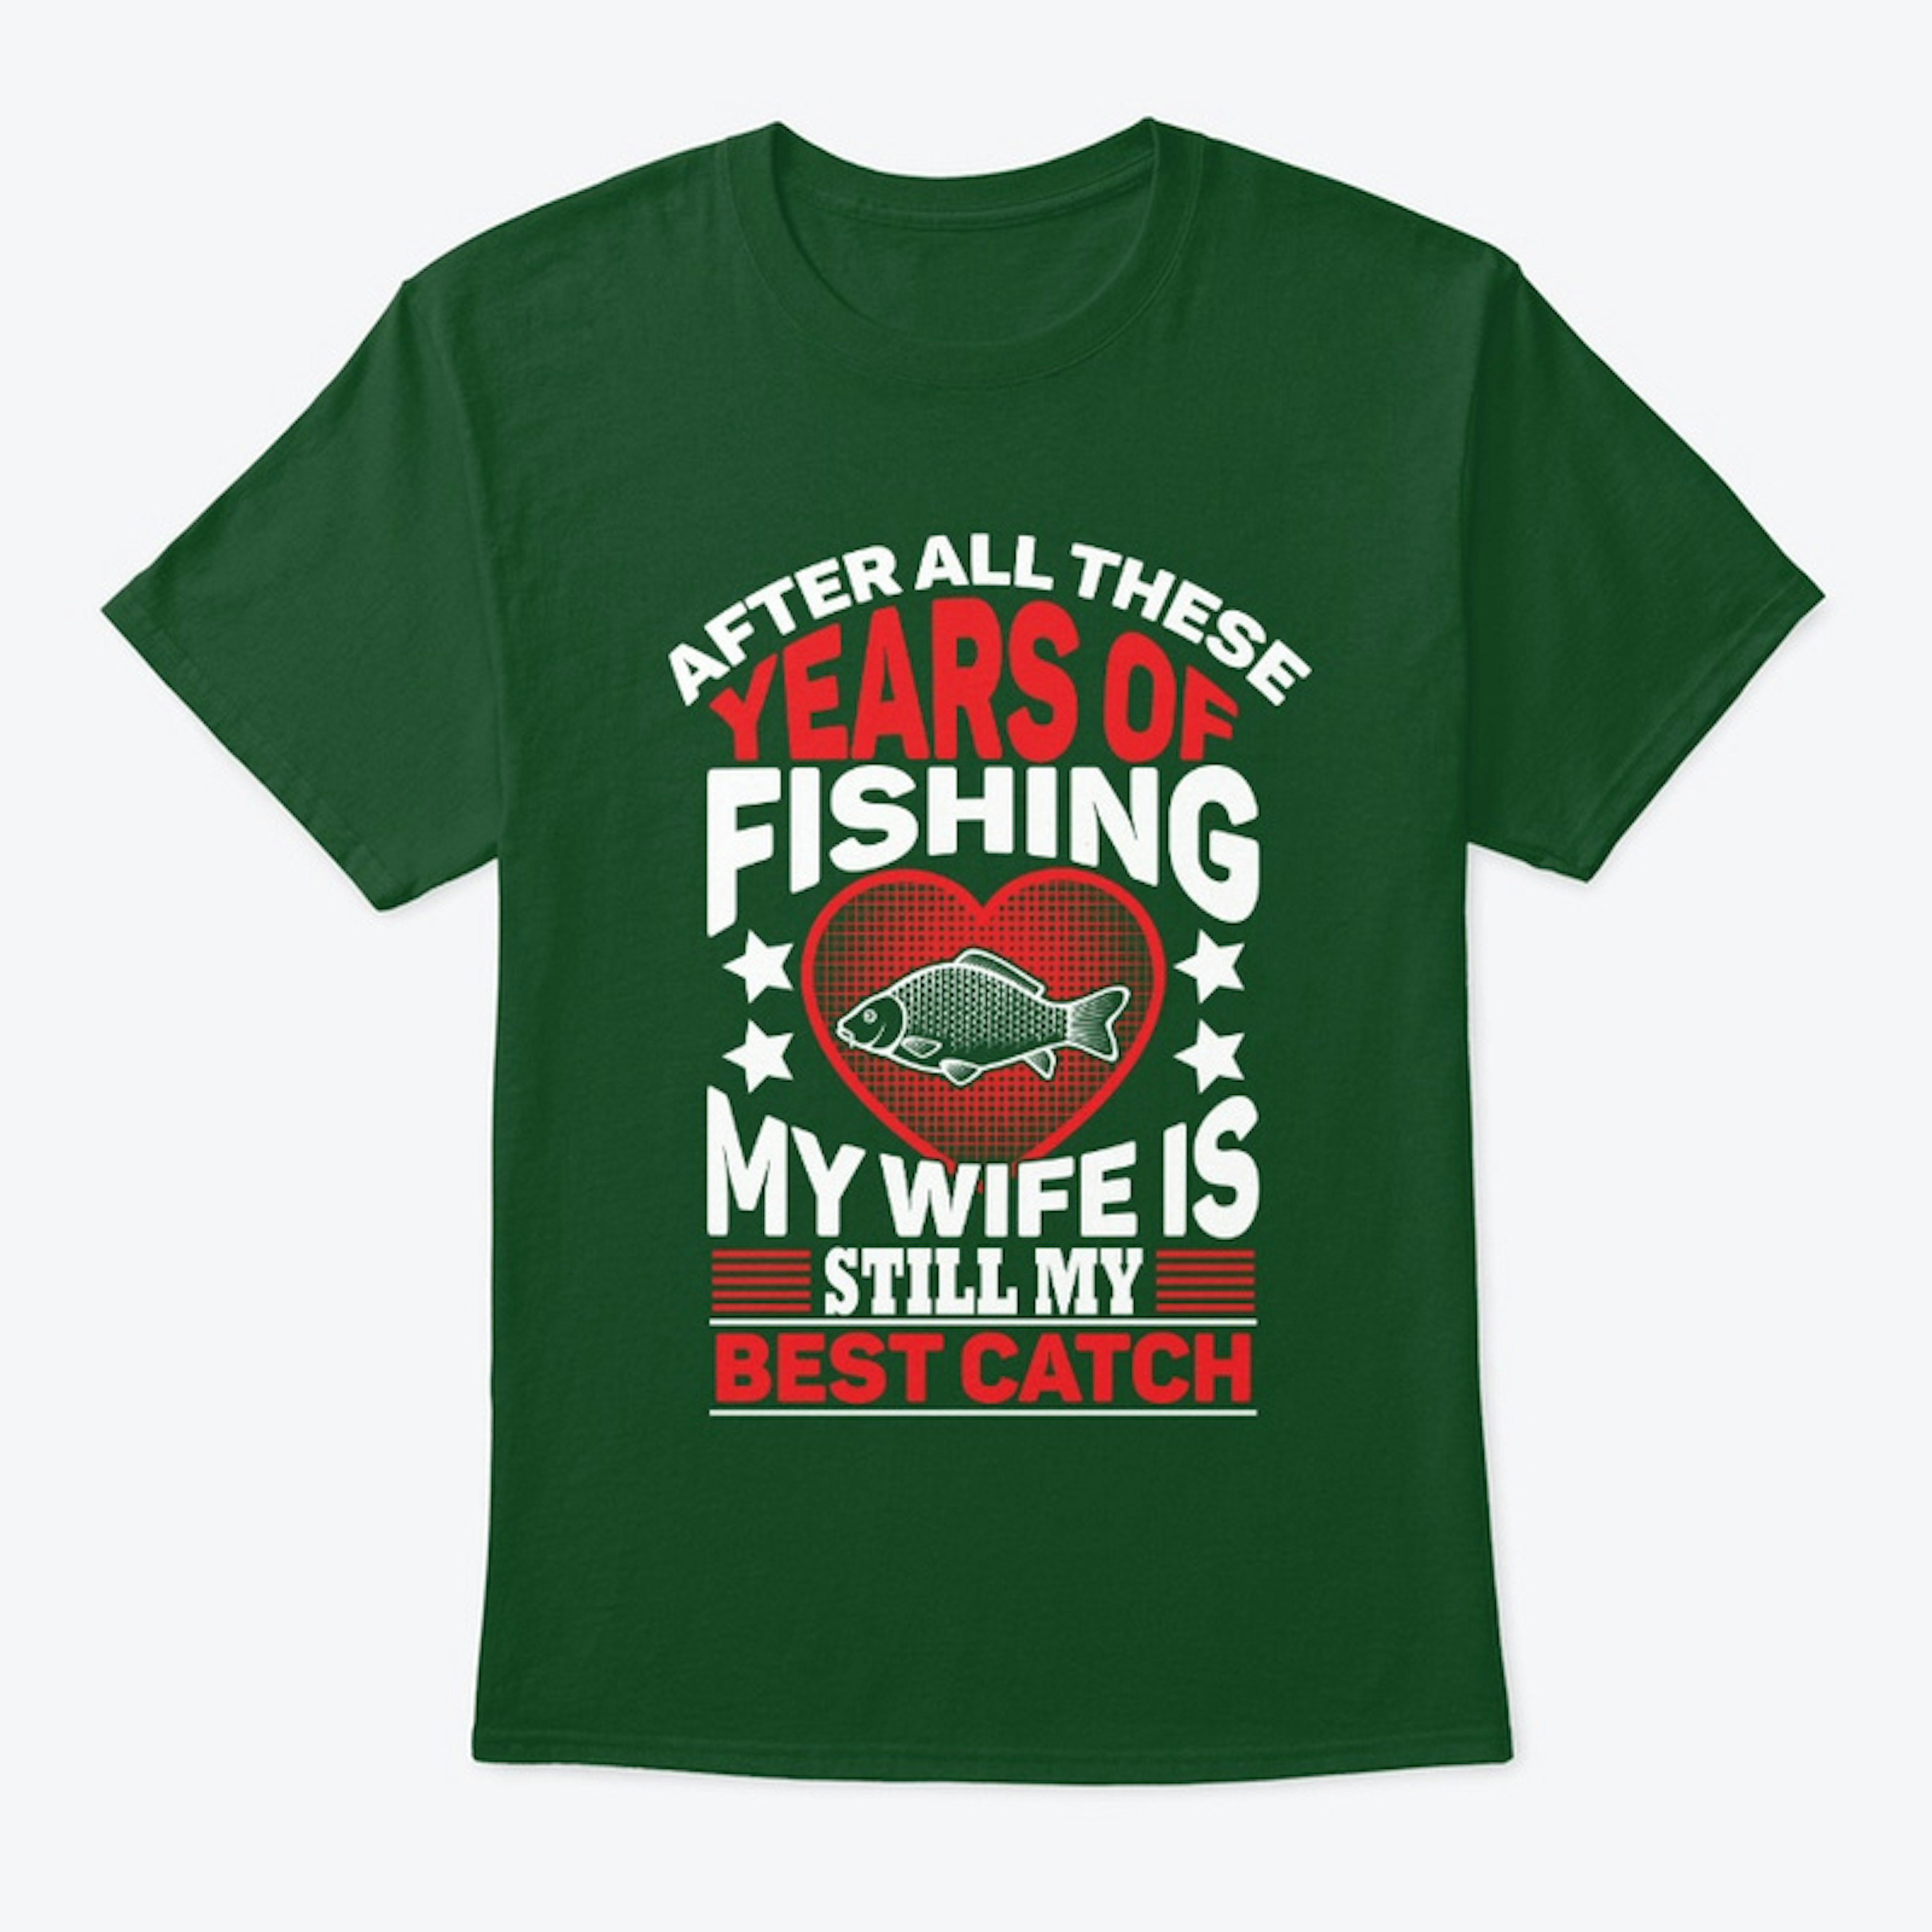 Fishing Shirt - MY WIFE BEST CATCH